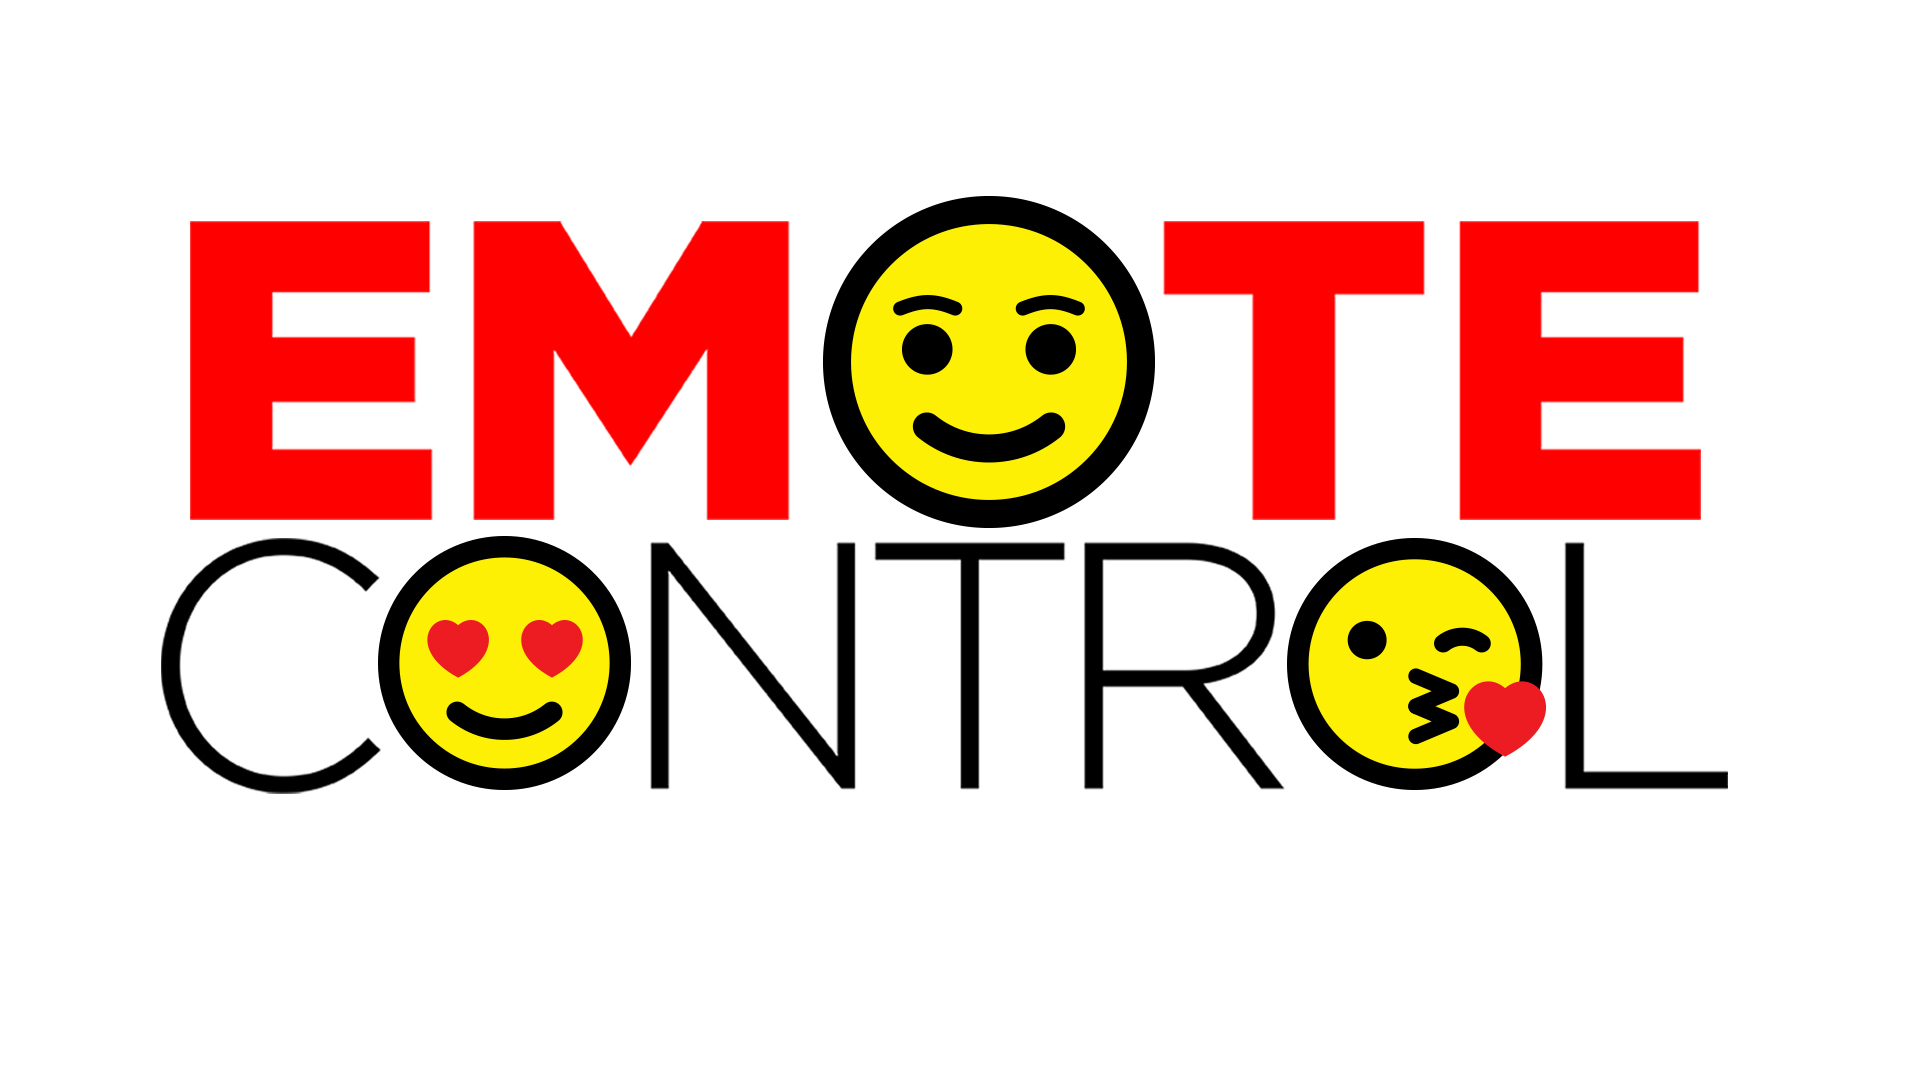    Emote Control